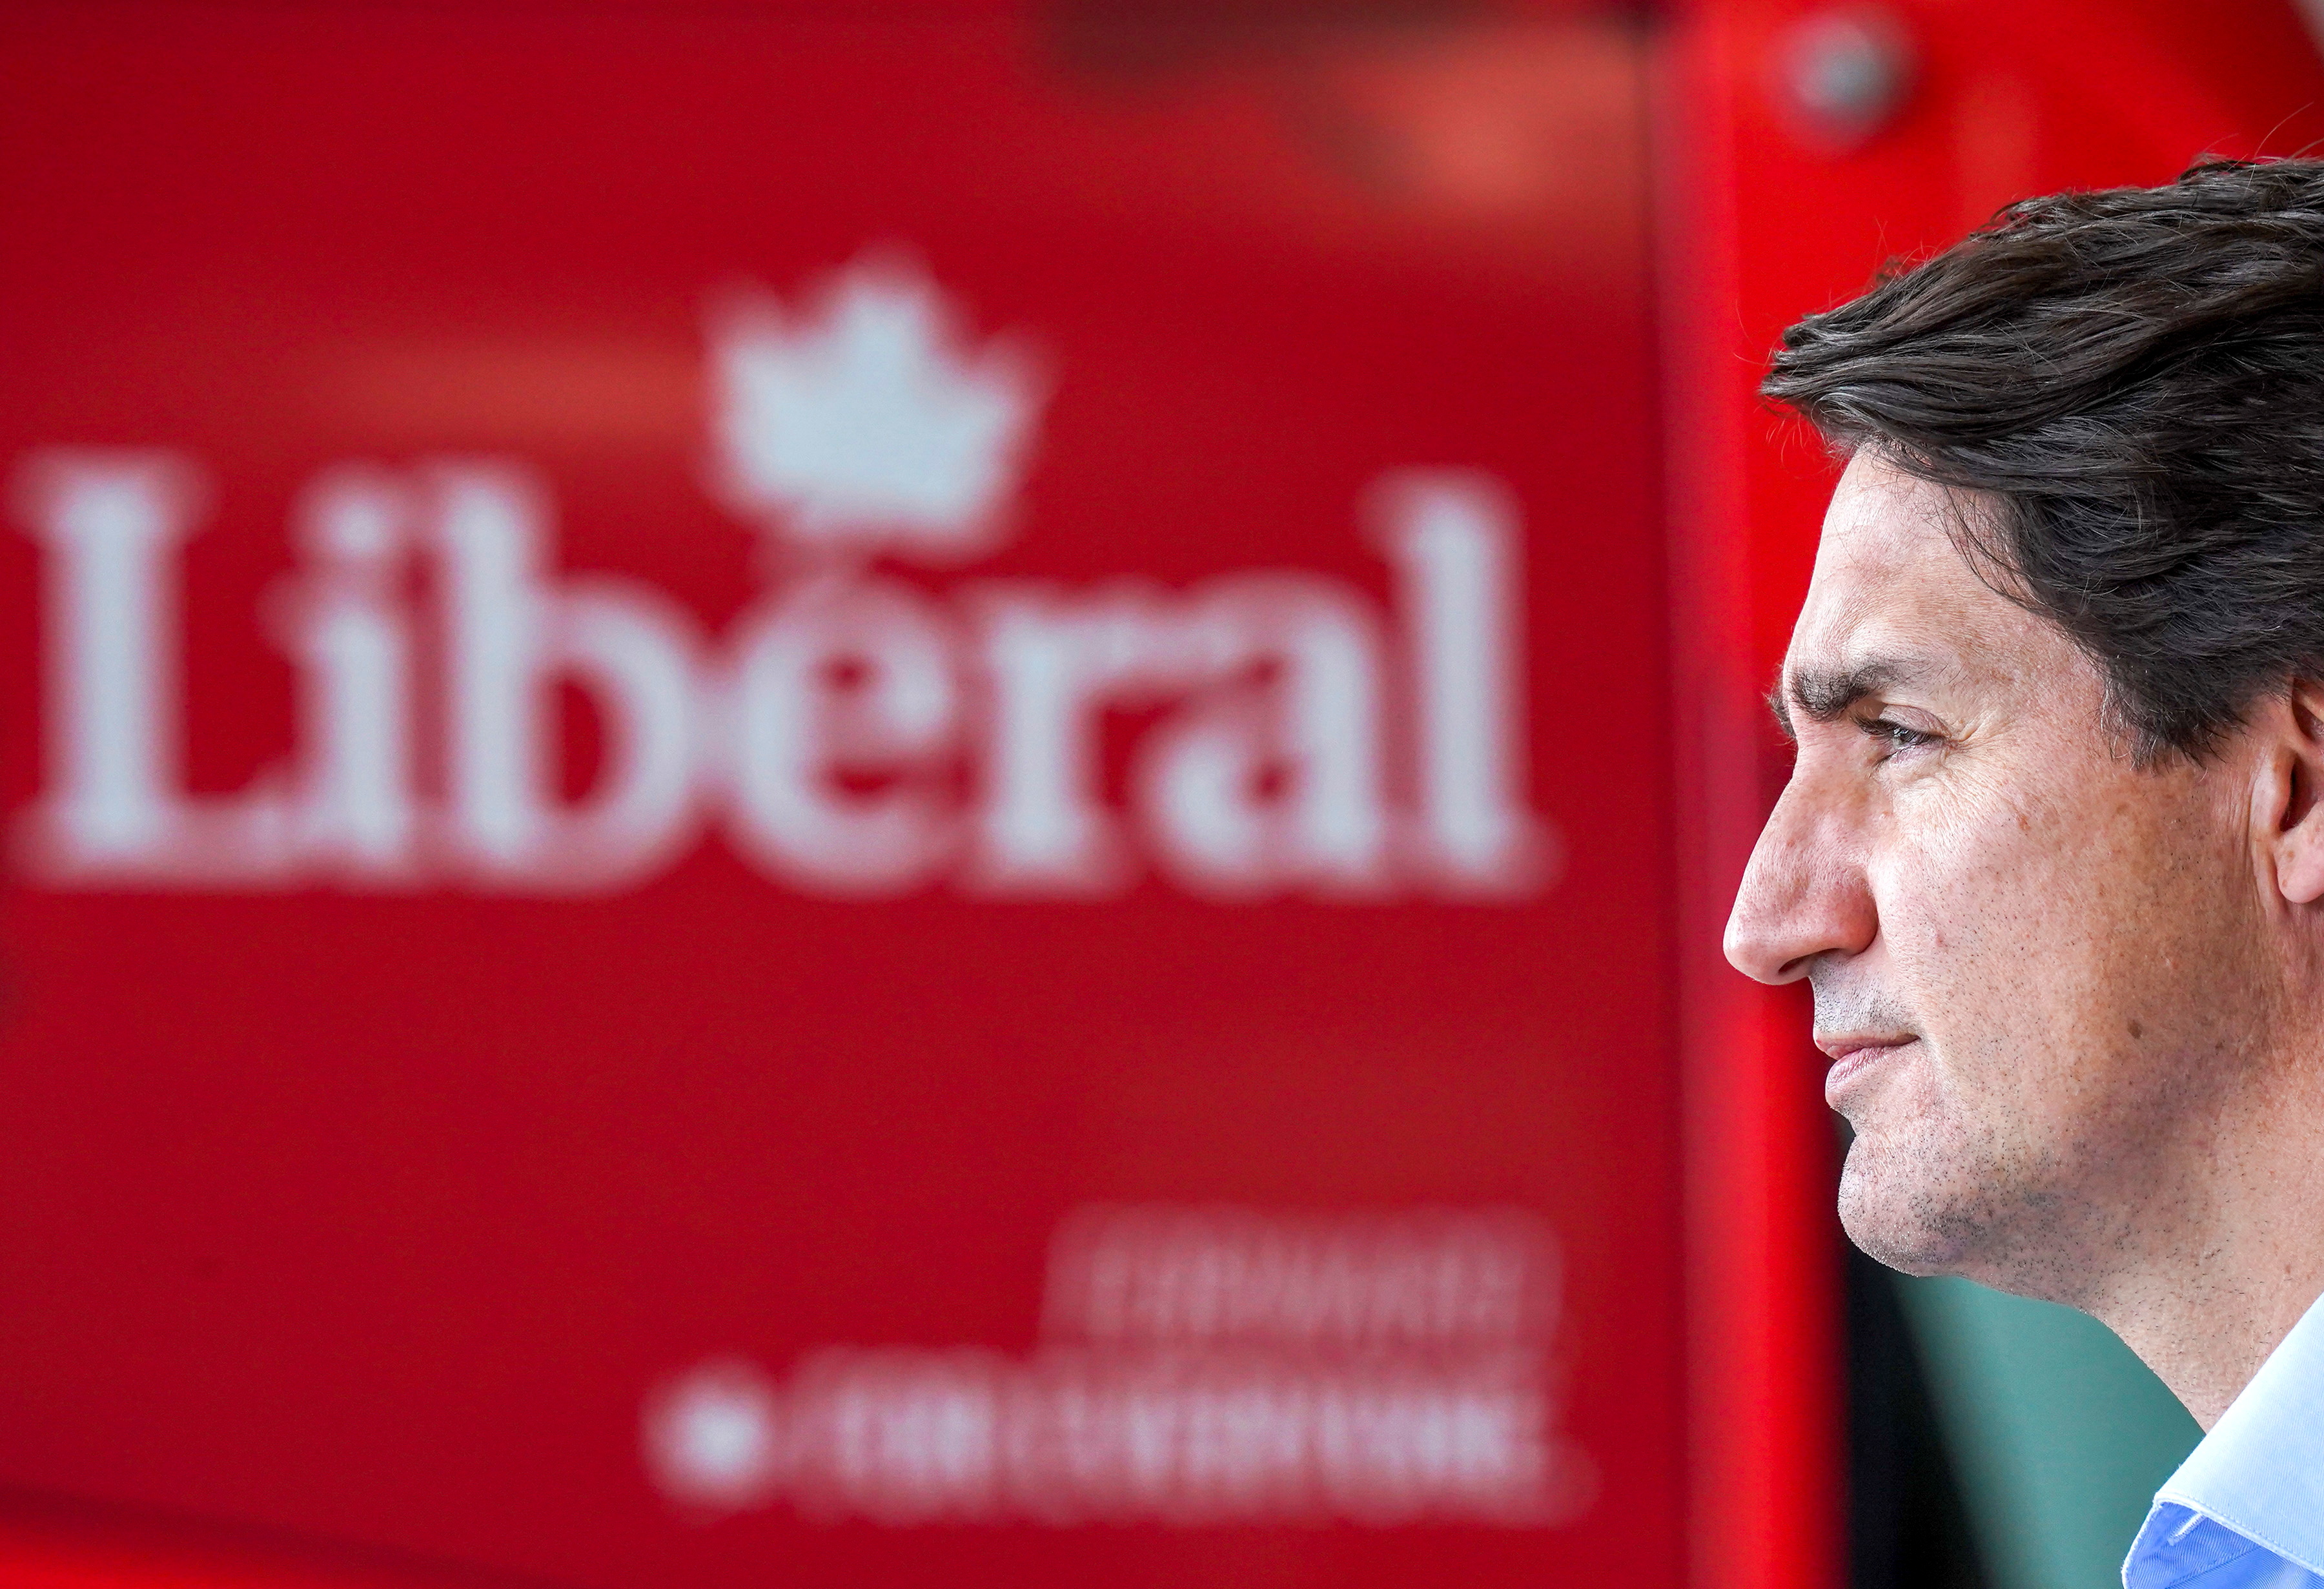 Canada's Prime Minister Justin Trudeau campaigns in Mississauga, Ontario